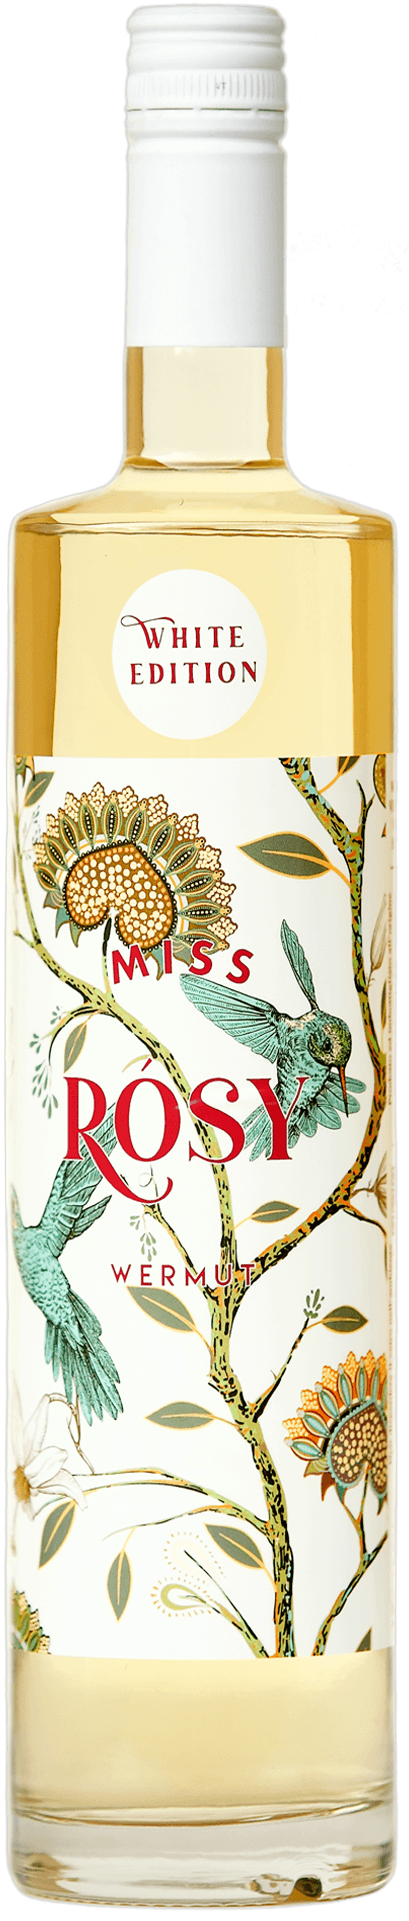 Miss Rosy white